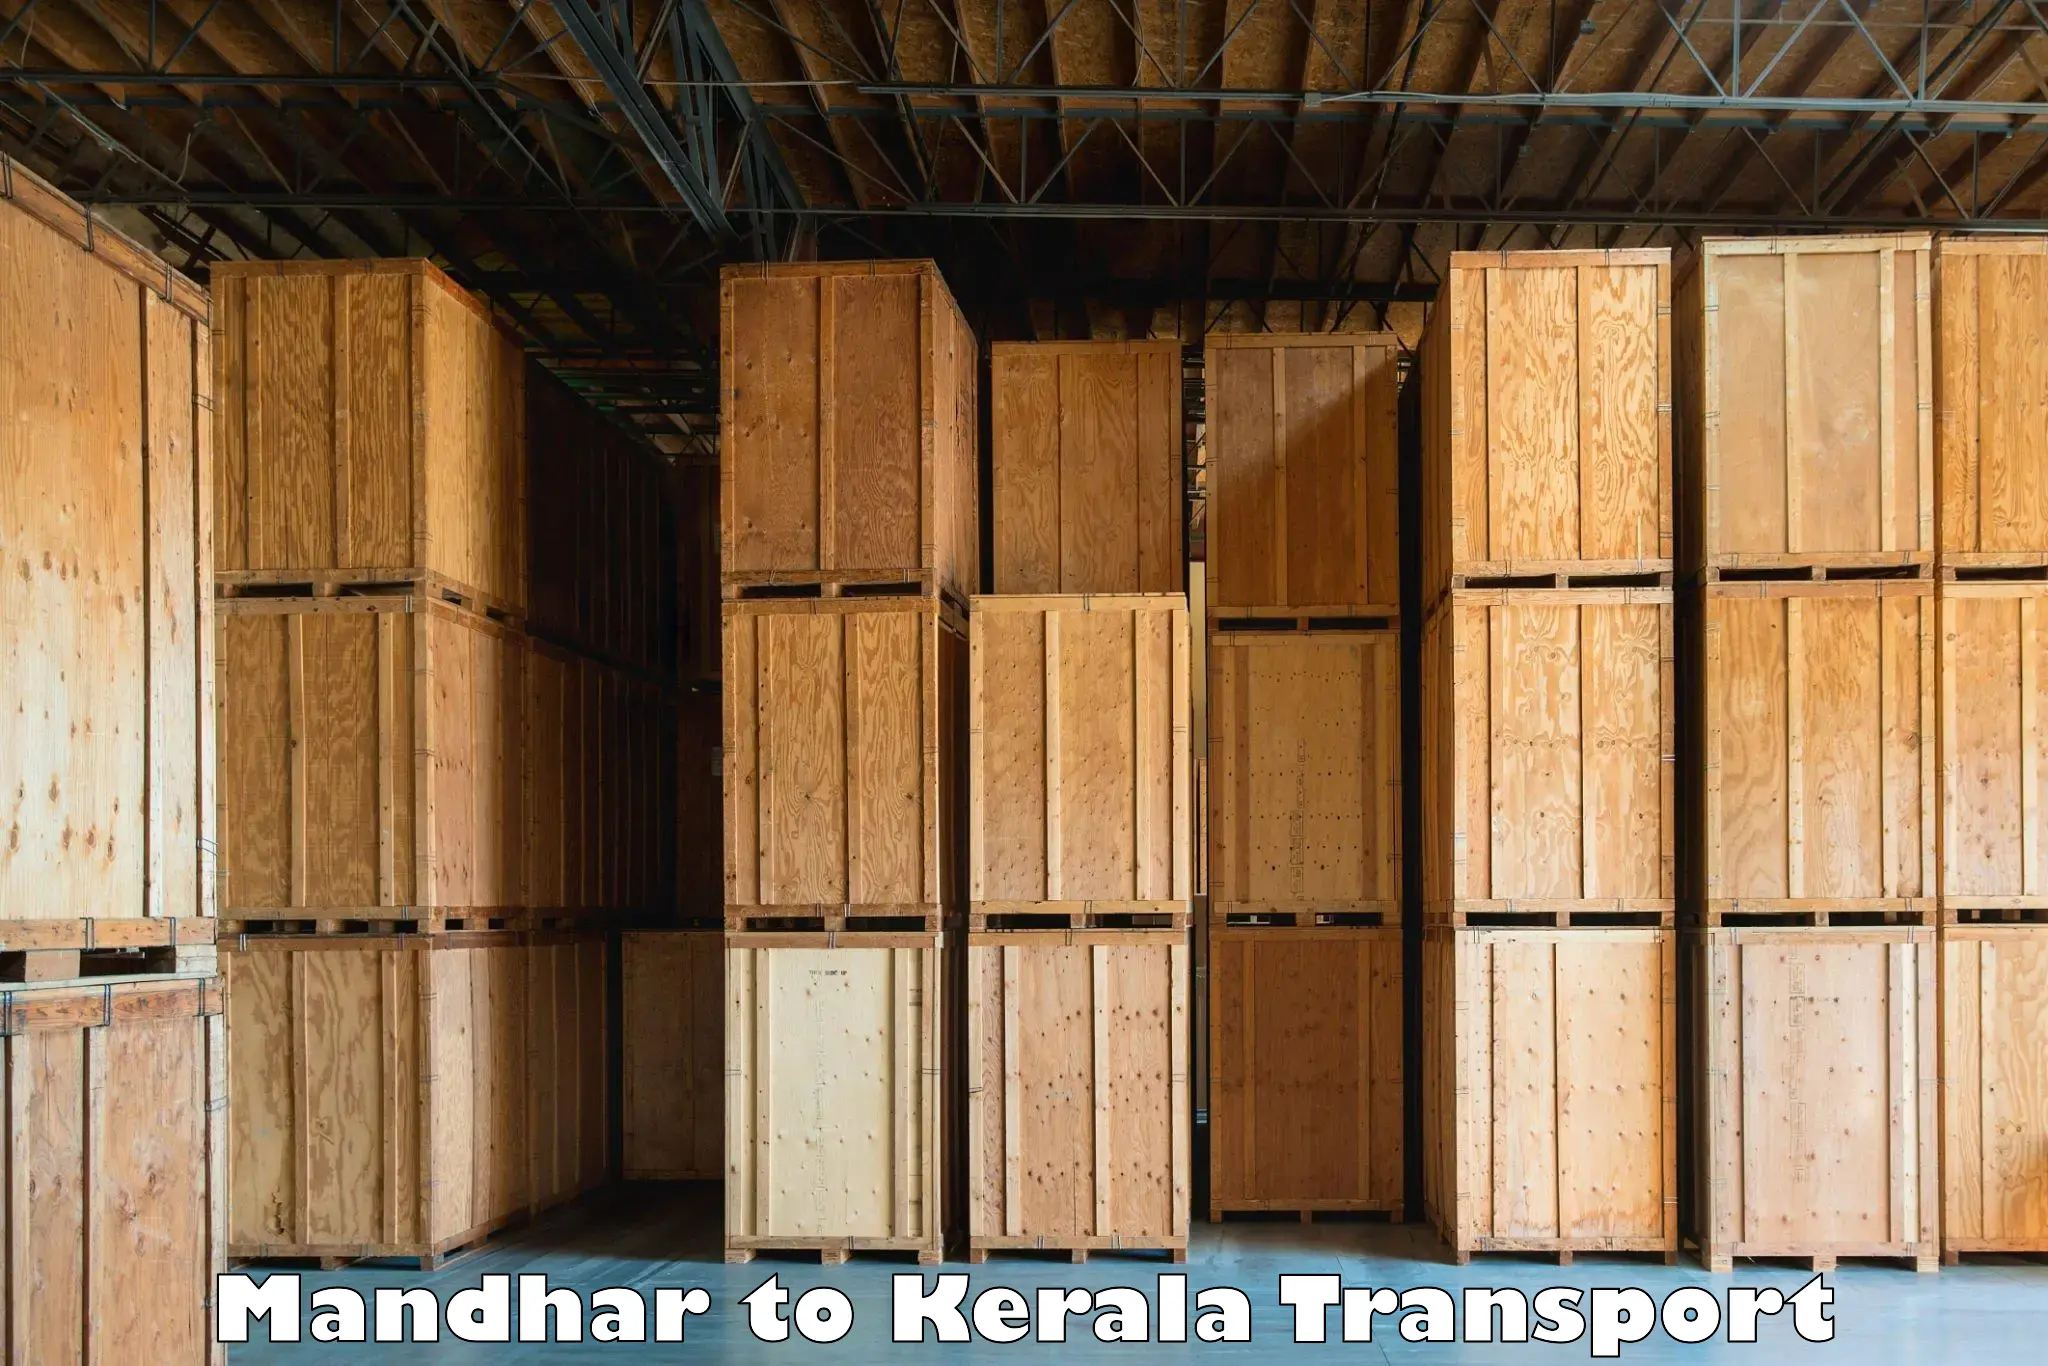 Cycle transportation service Mandhar to Kerala